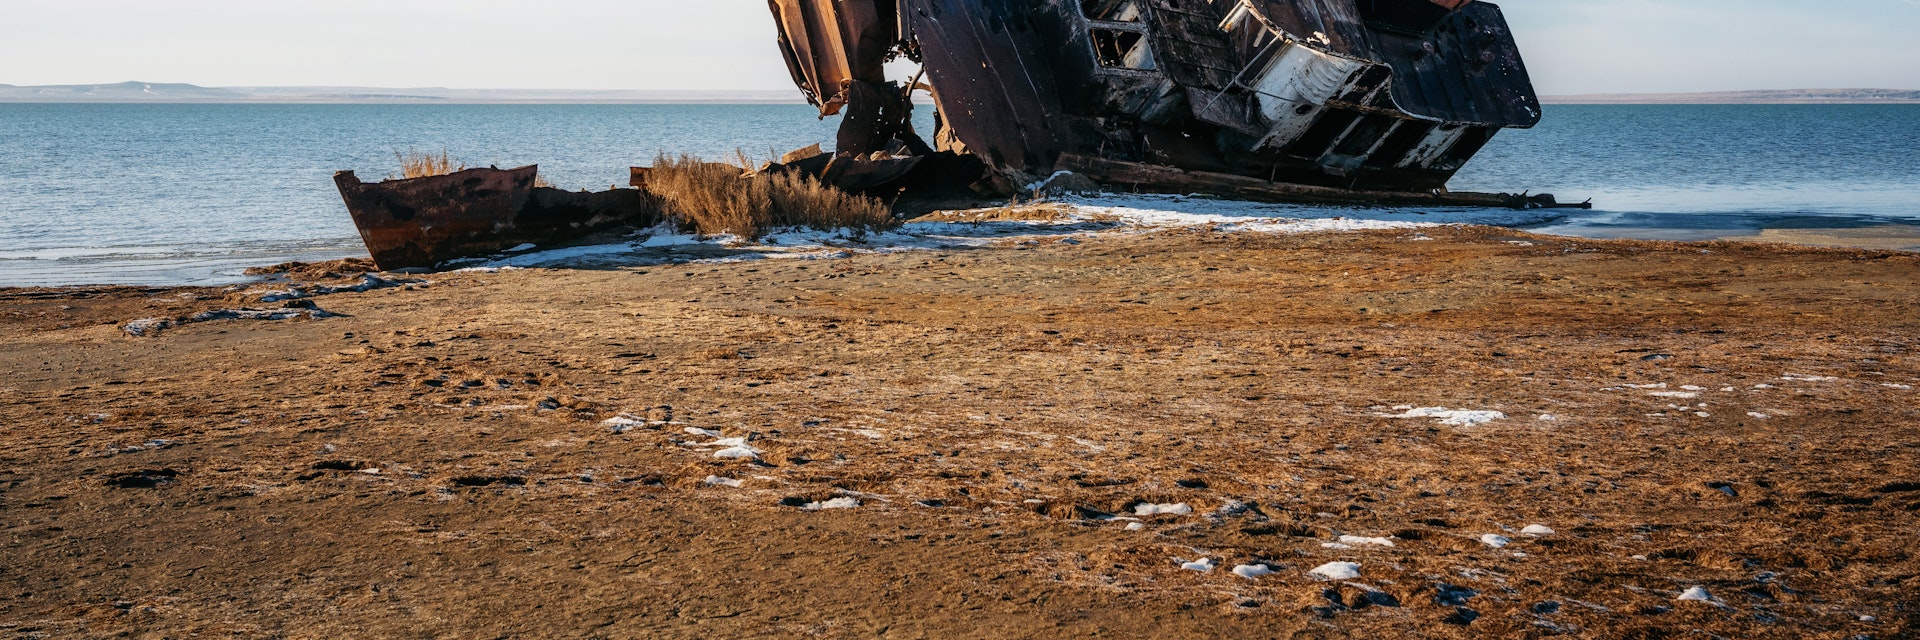 Ship remains on shore of the Aral sea, Kazakhstan.